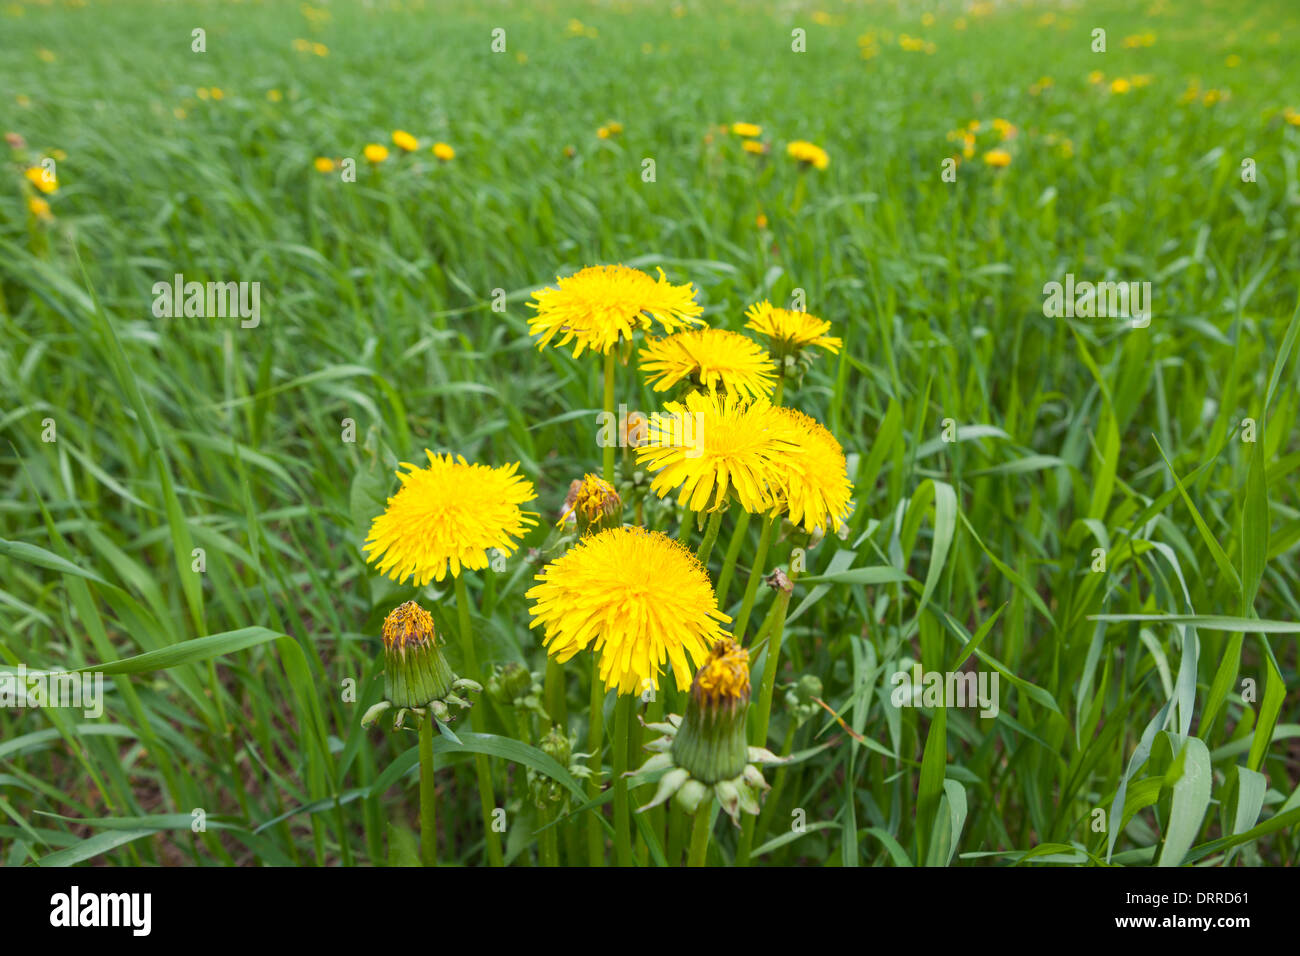 Beautiful Dandelions flowering in the grass field Stock Photo